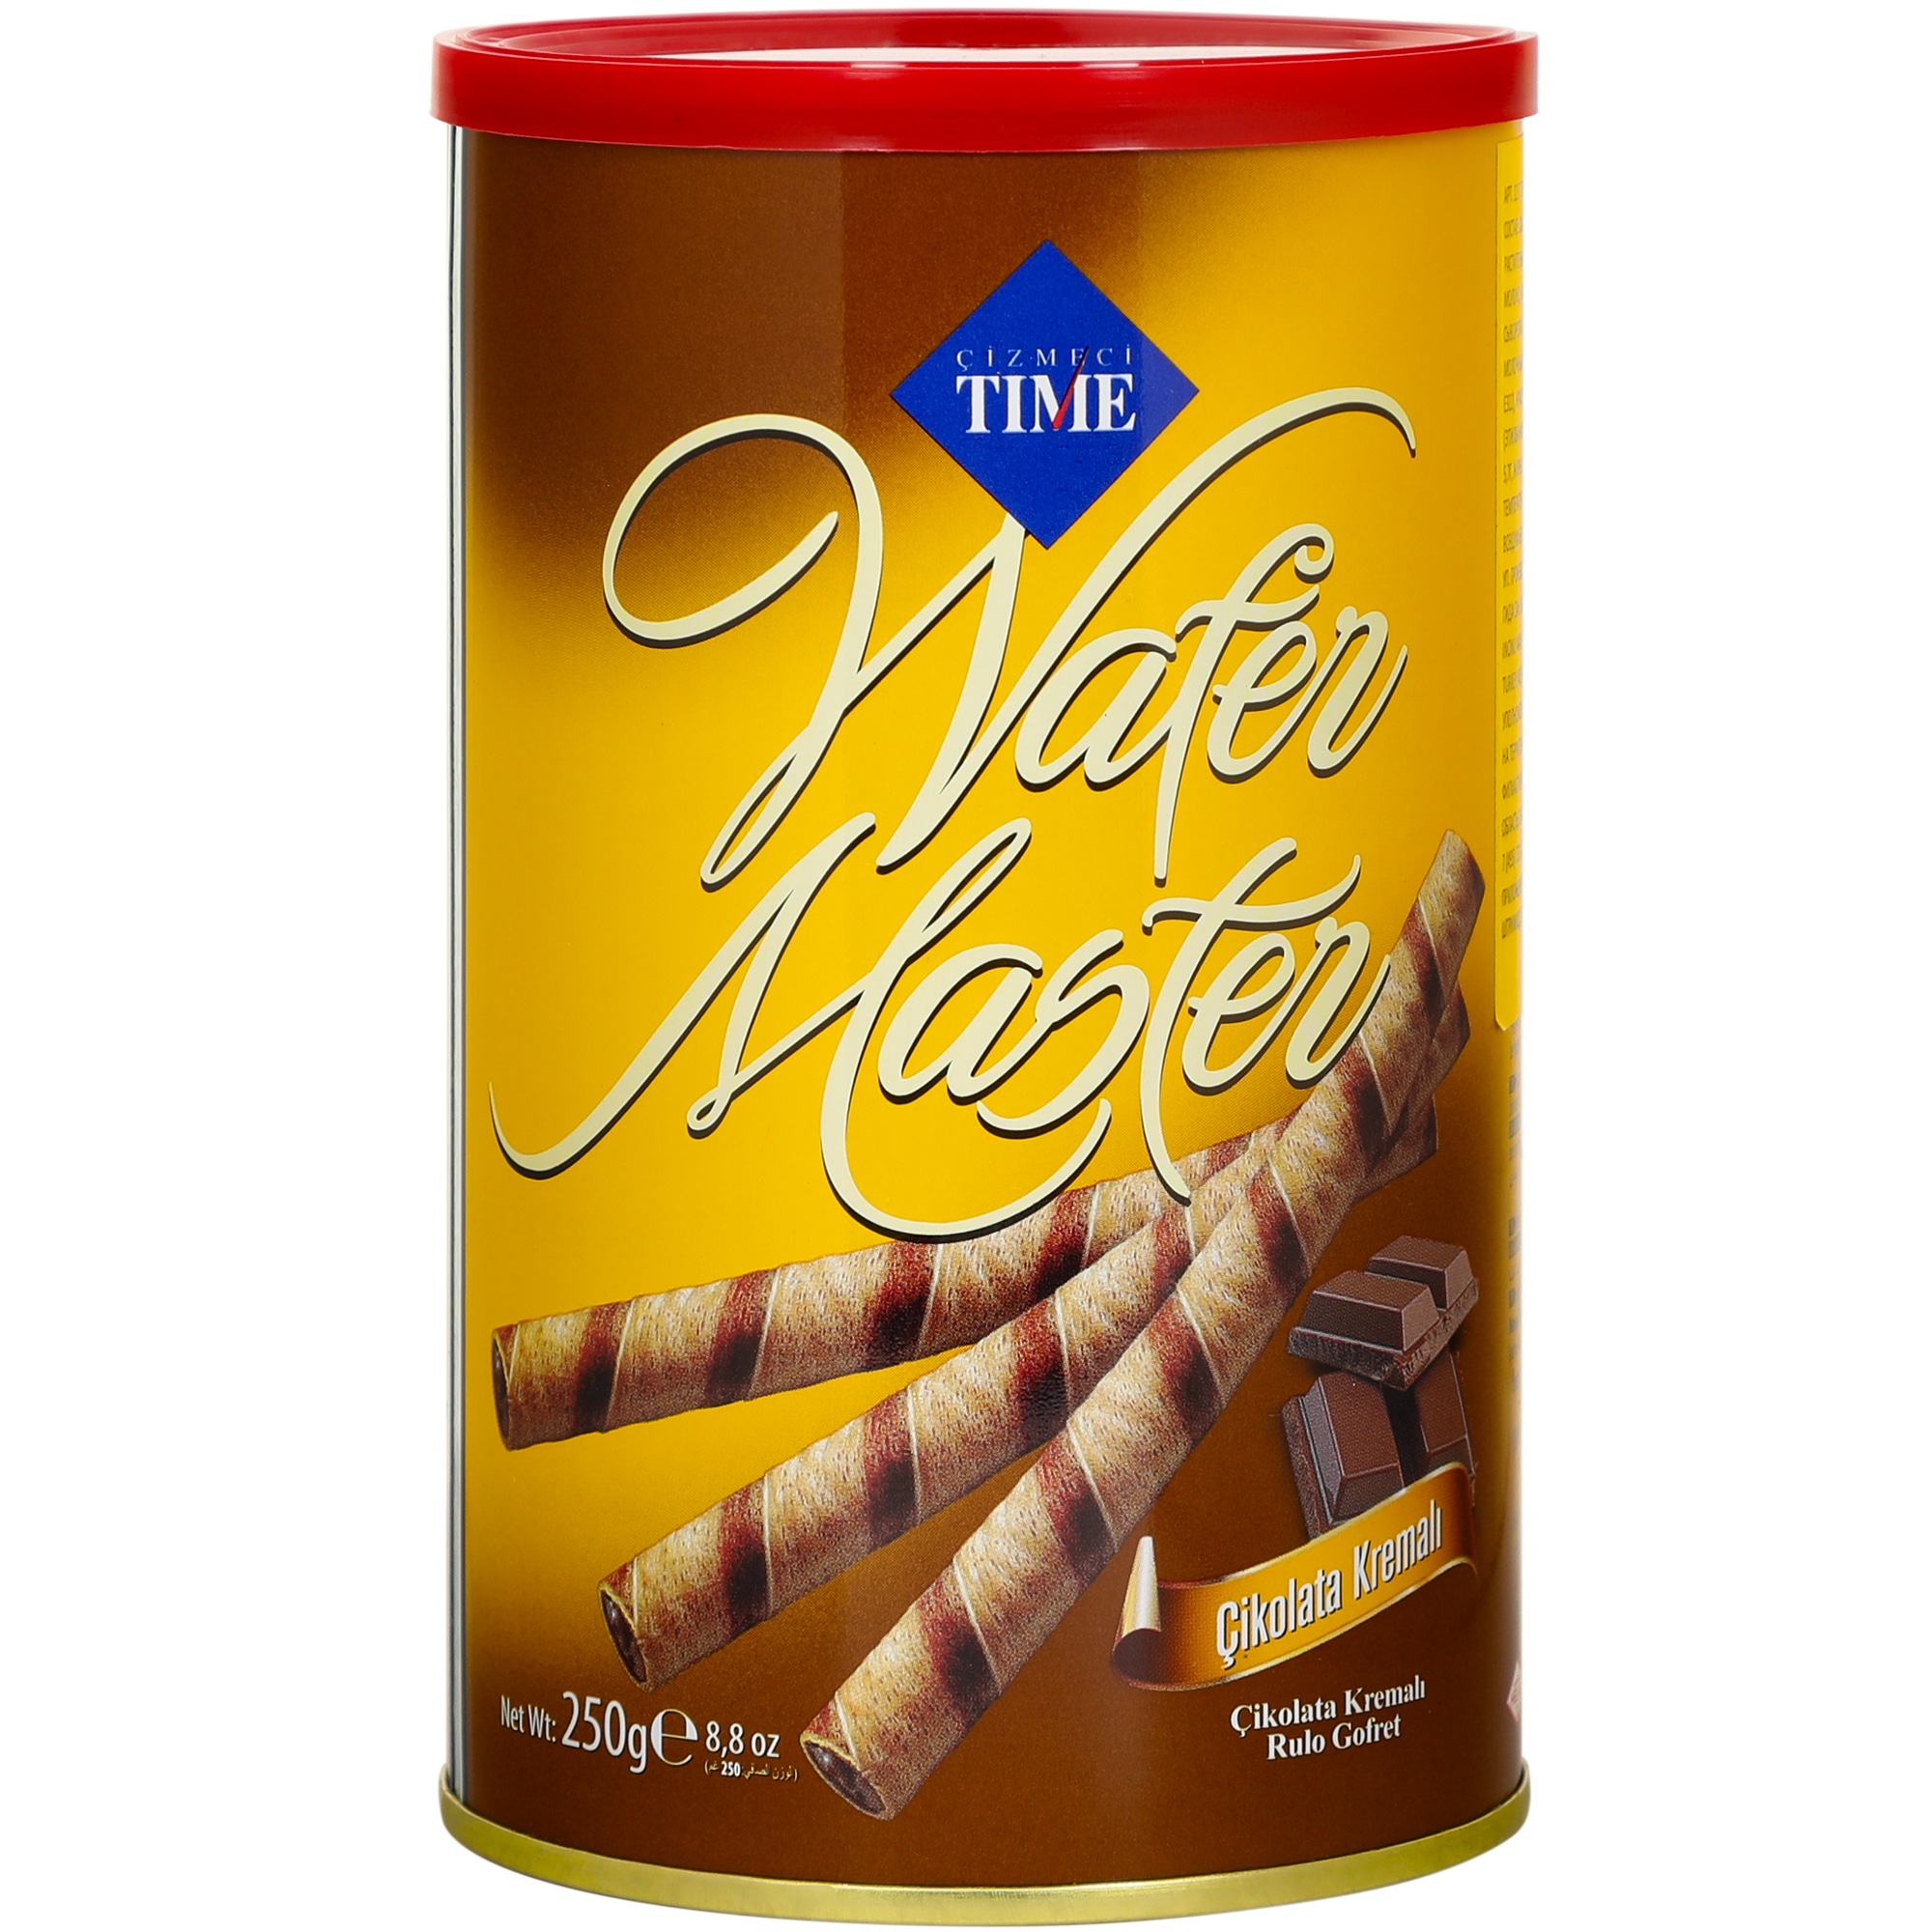 трубочки для стаканов klean kanteen straw 10мм 3 шт Трубочки Cizmeci Time вафельные wafer master шоколад, 250 г